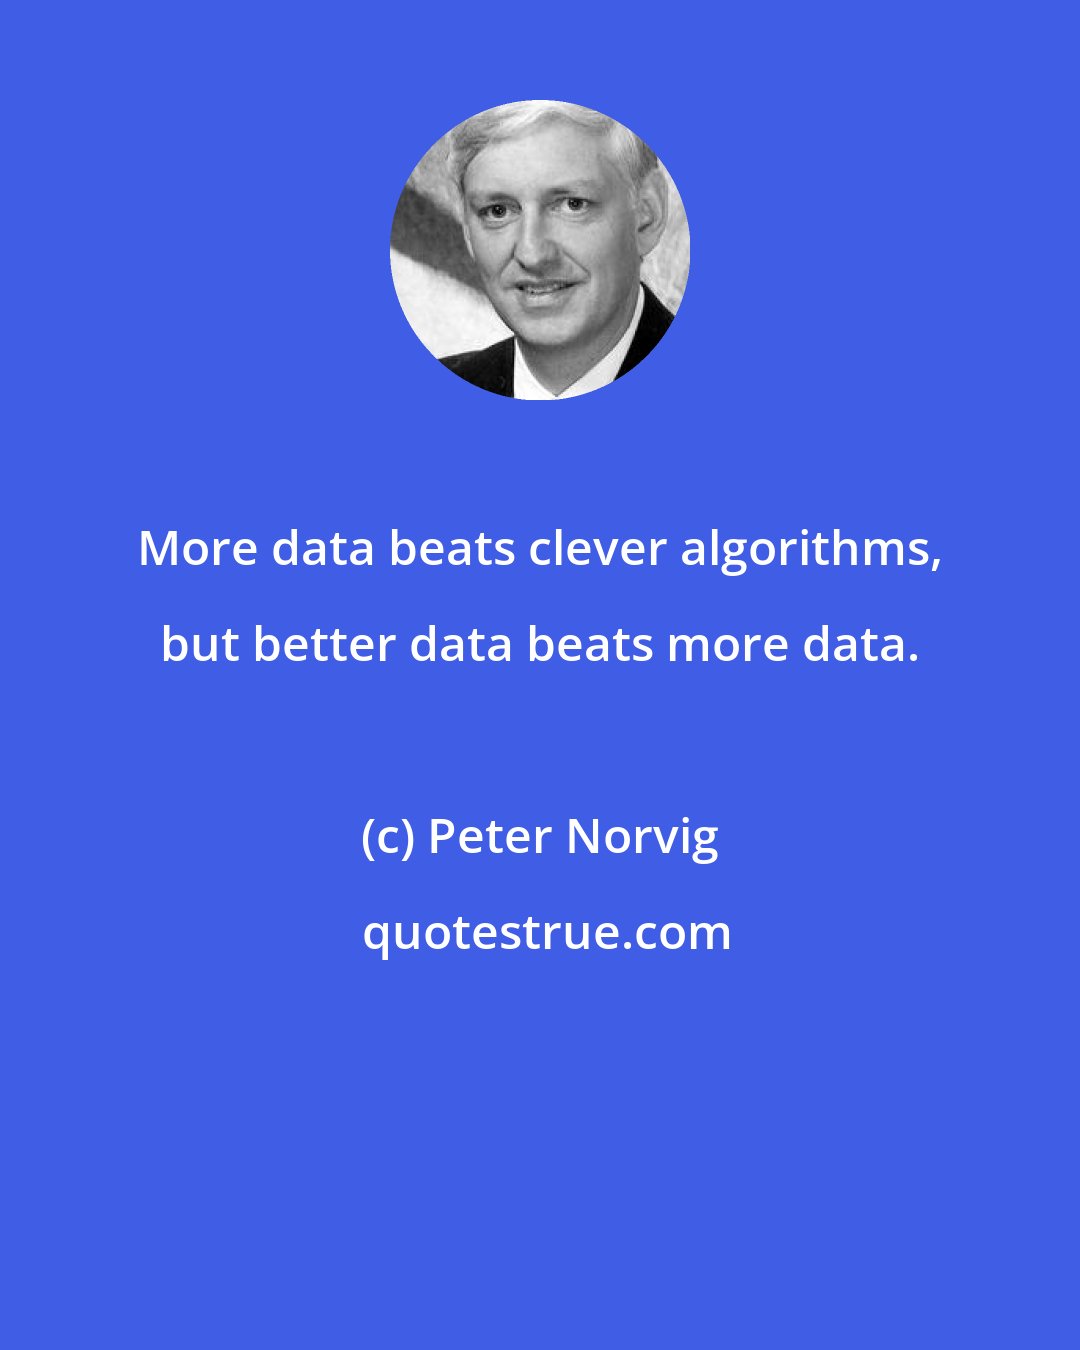 Peter Norvig: More data beats clever algorithms, but better data beats more data.